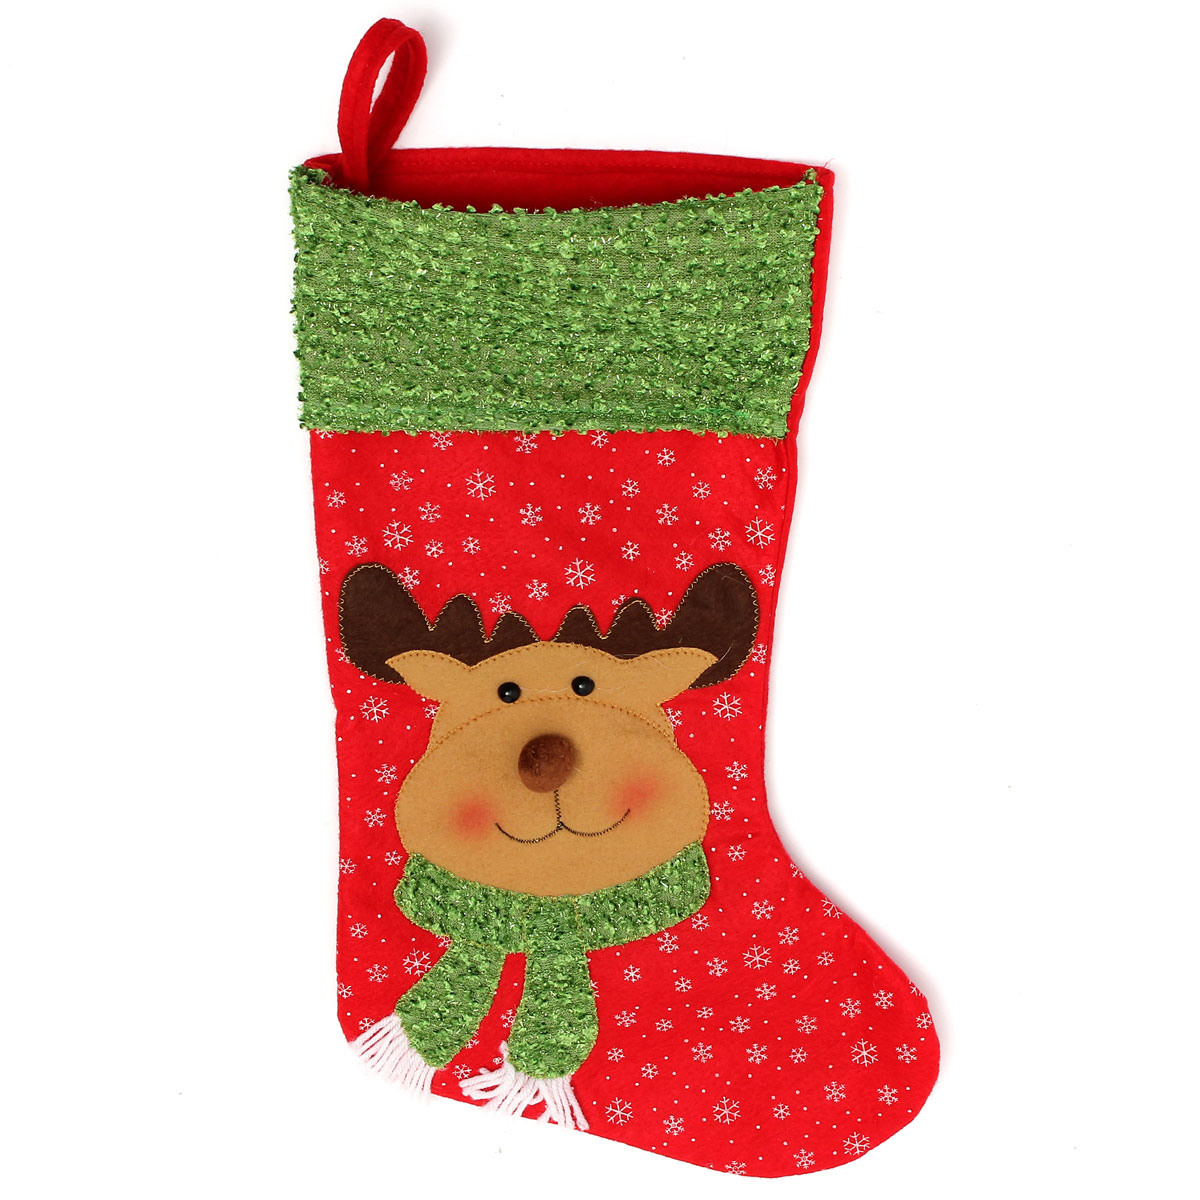 Christmas-Santa-Clau-Snowman-Elk-Stockings-Hanging-Gift-Bag-Christmas-Party-Deocration-1009926-8